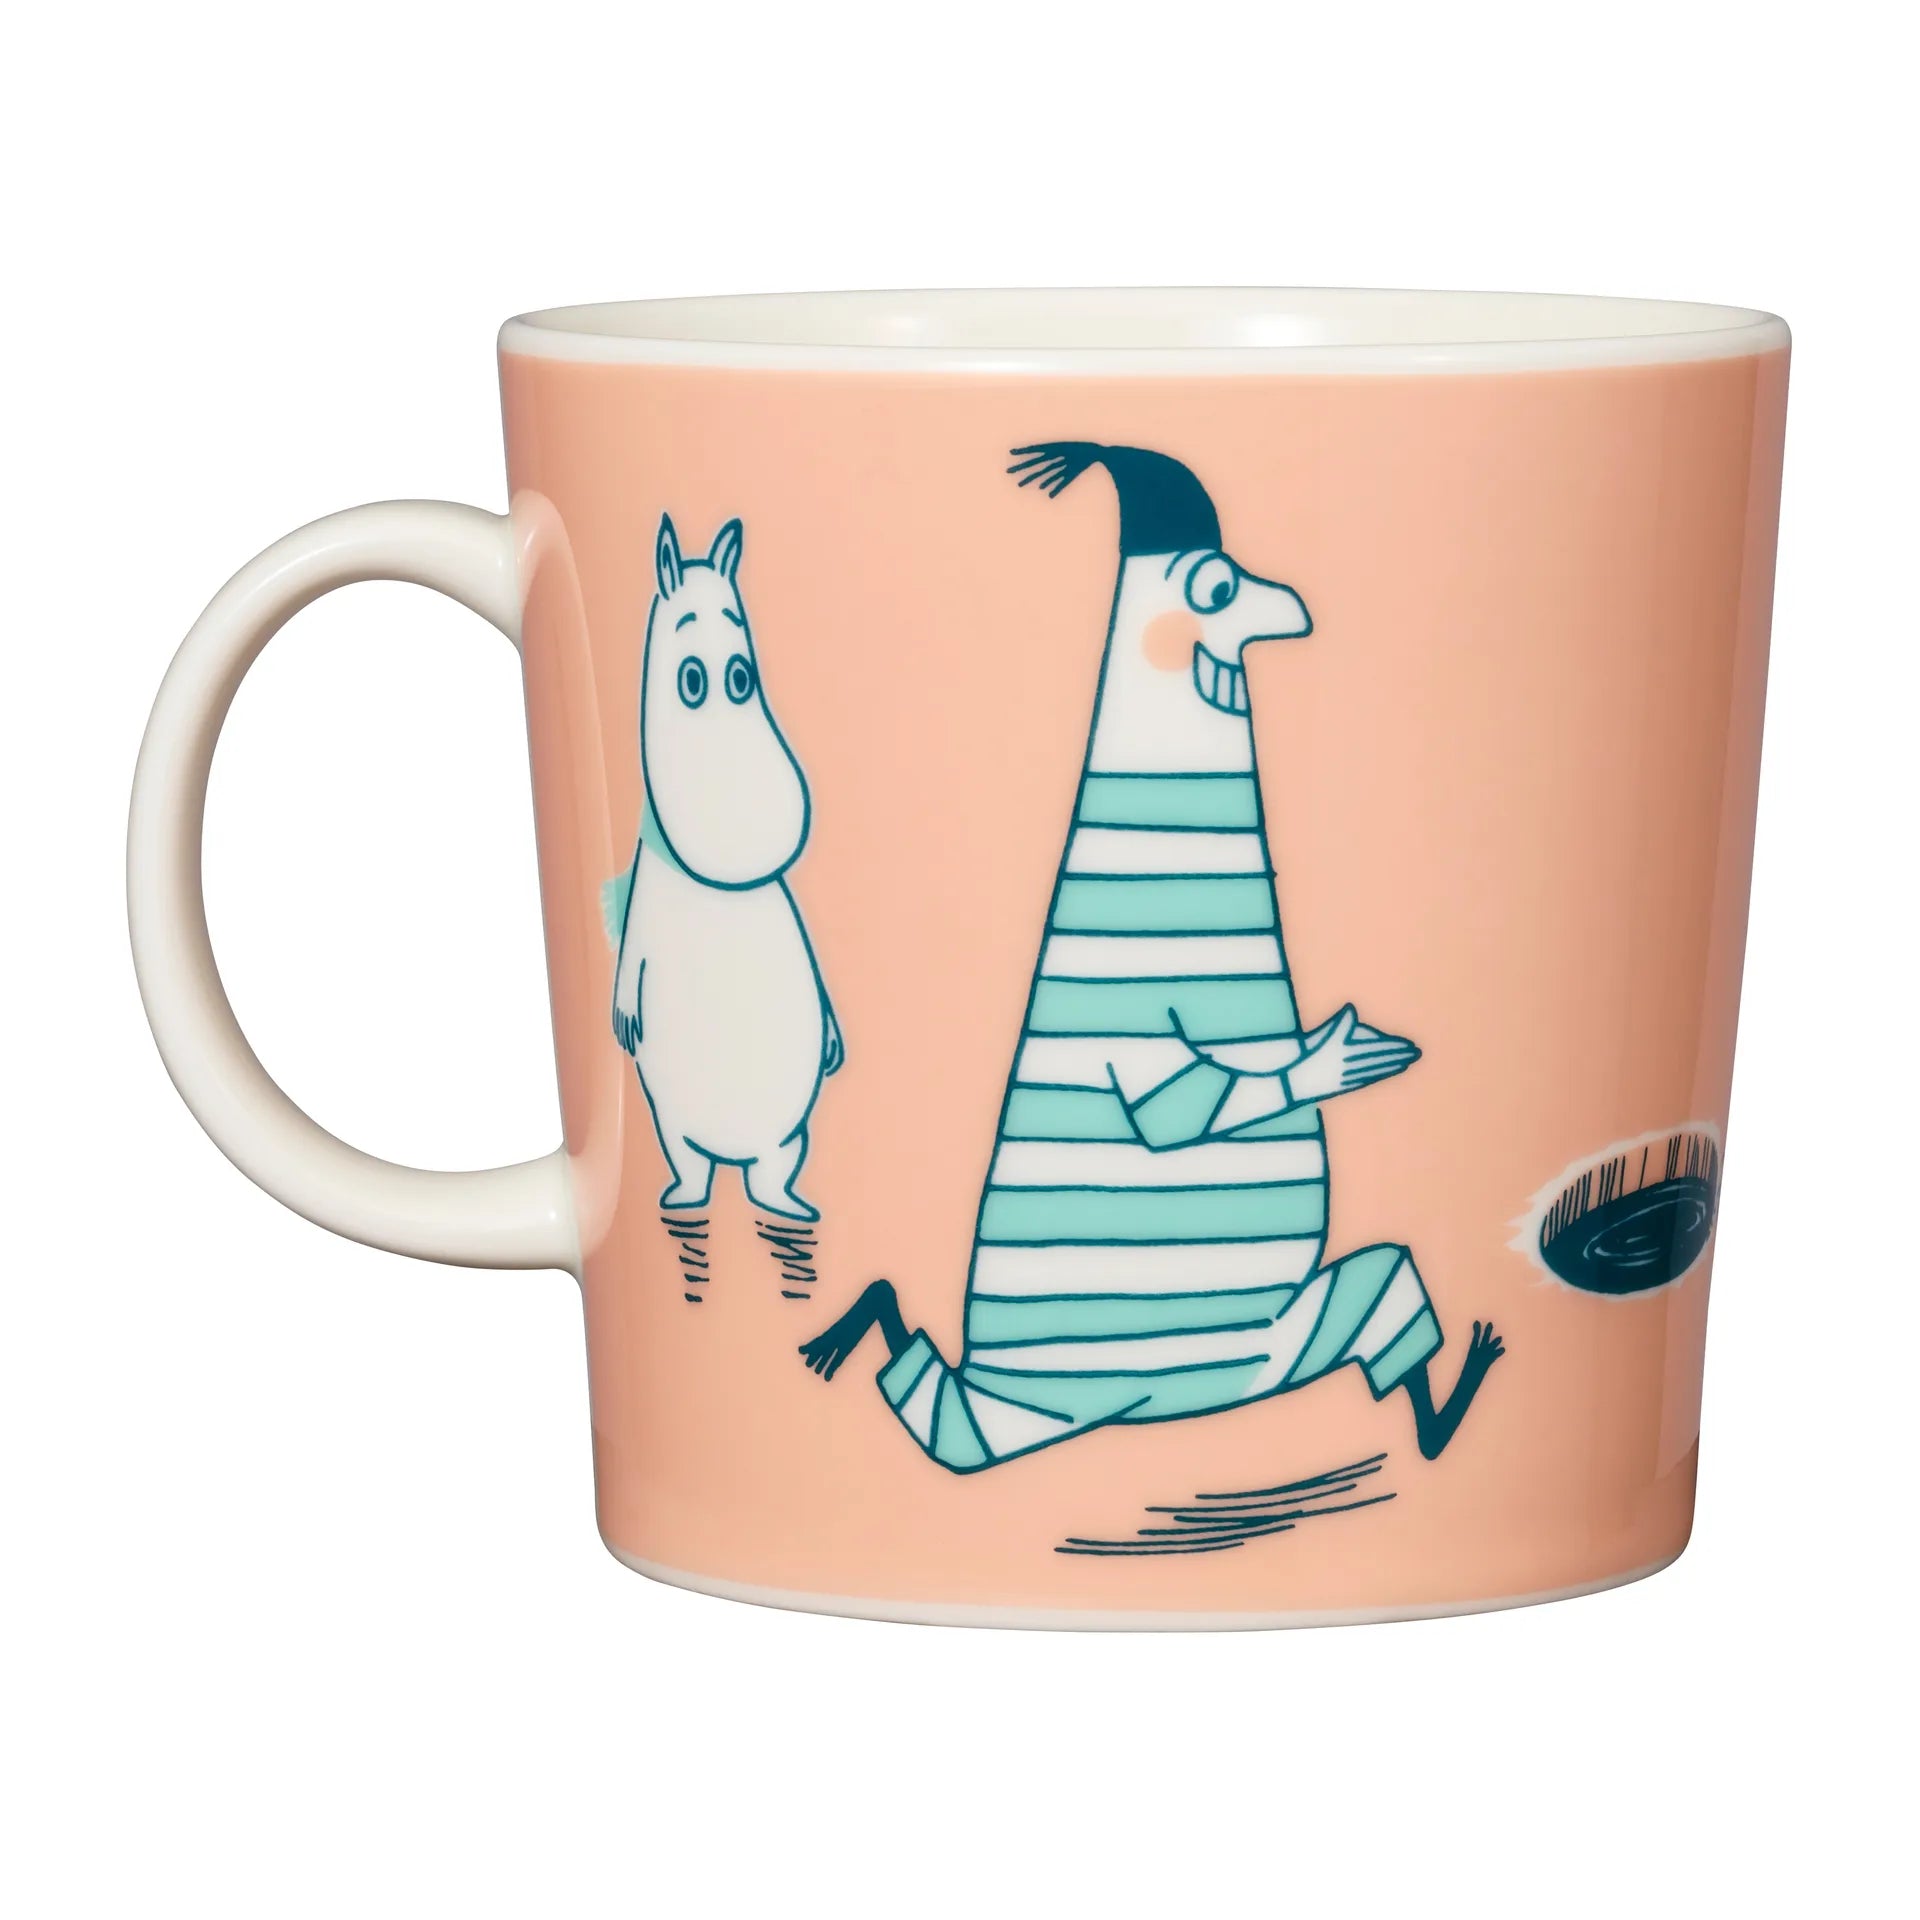 Moomin mug special LARGE 400ml ABC Moomin mug 40 cl E